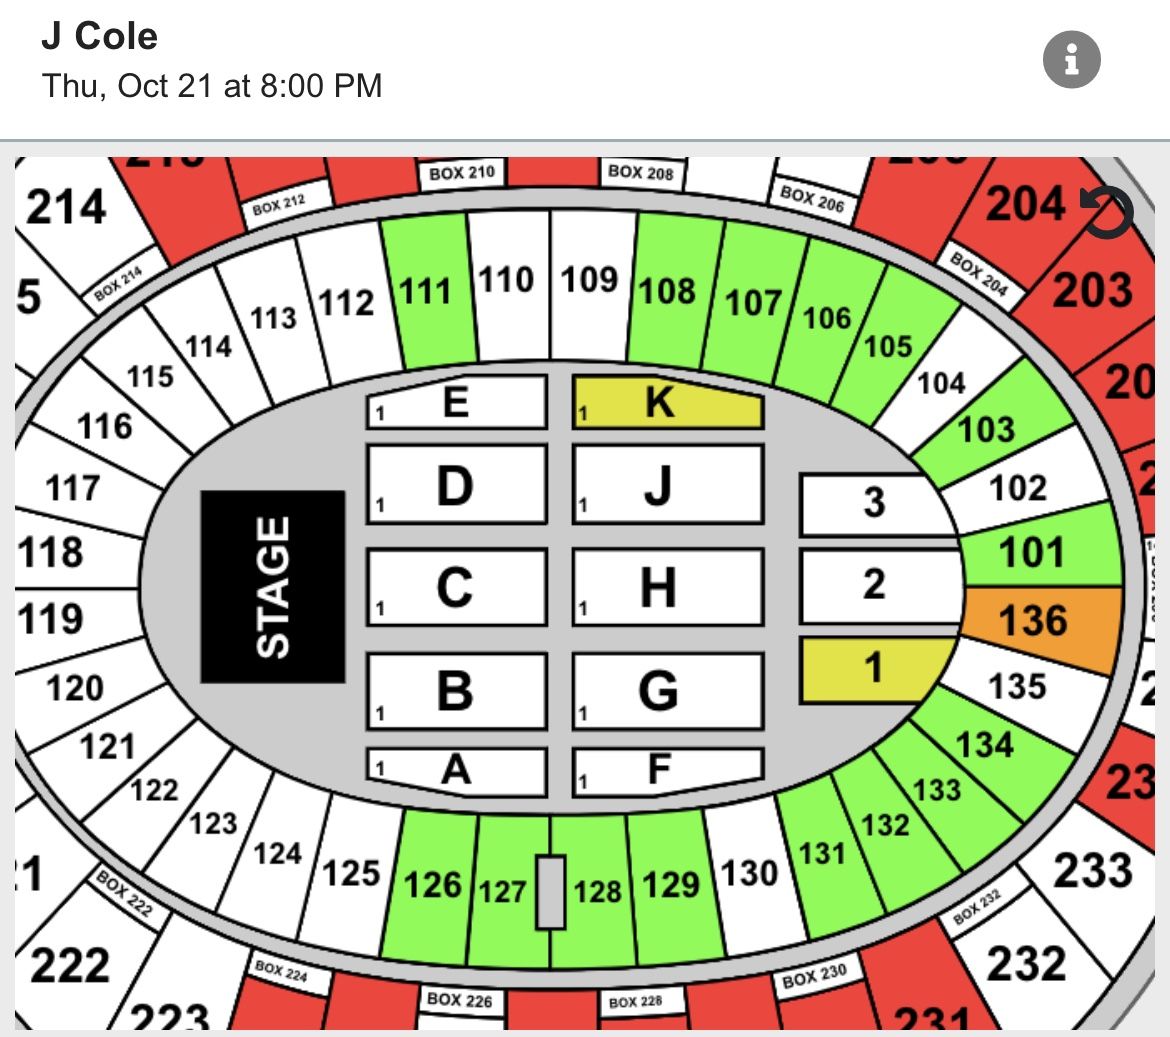 J. Cole Concert Ticket